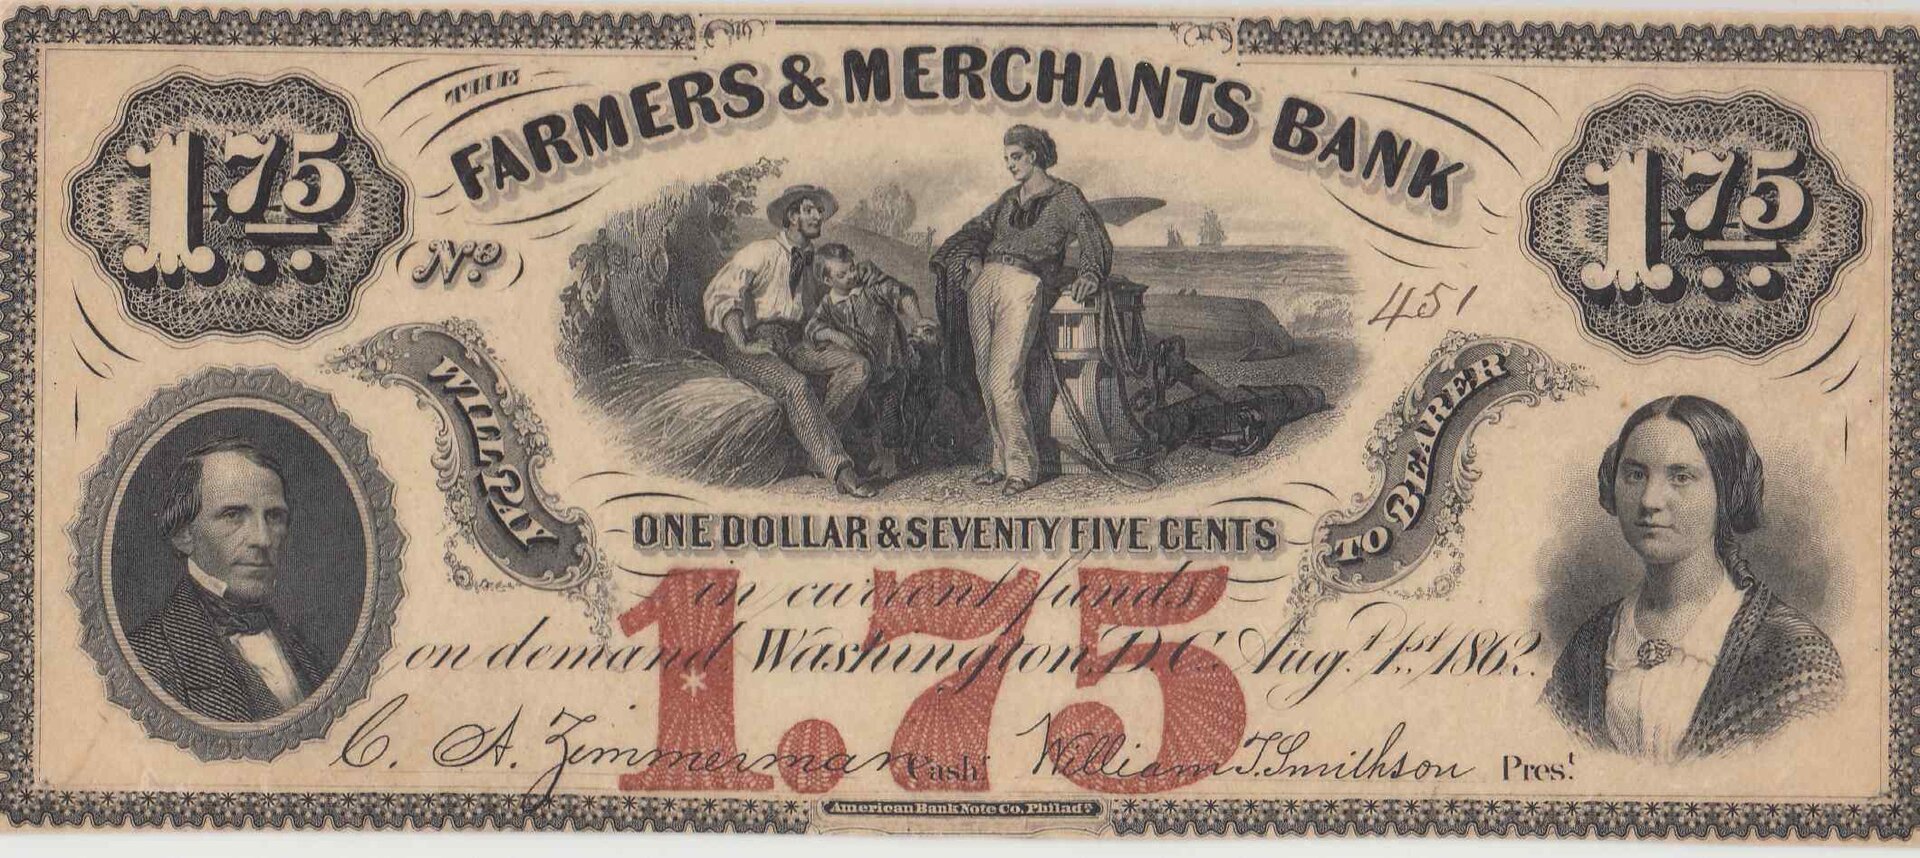 Farmers and Merchants Bank 1862 $1.75 face 2.jpg